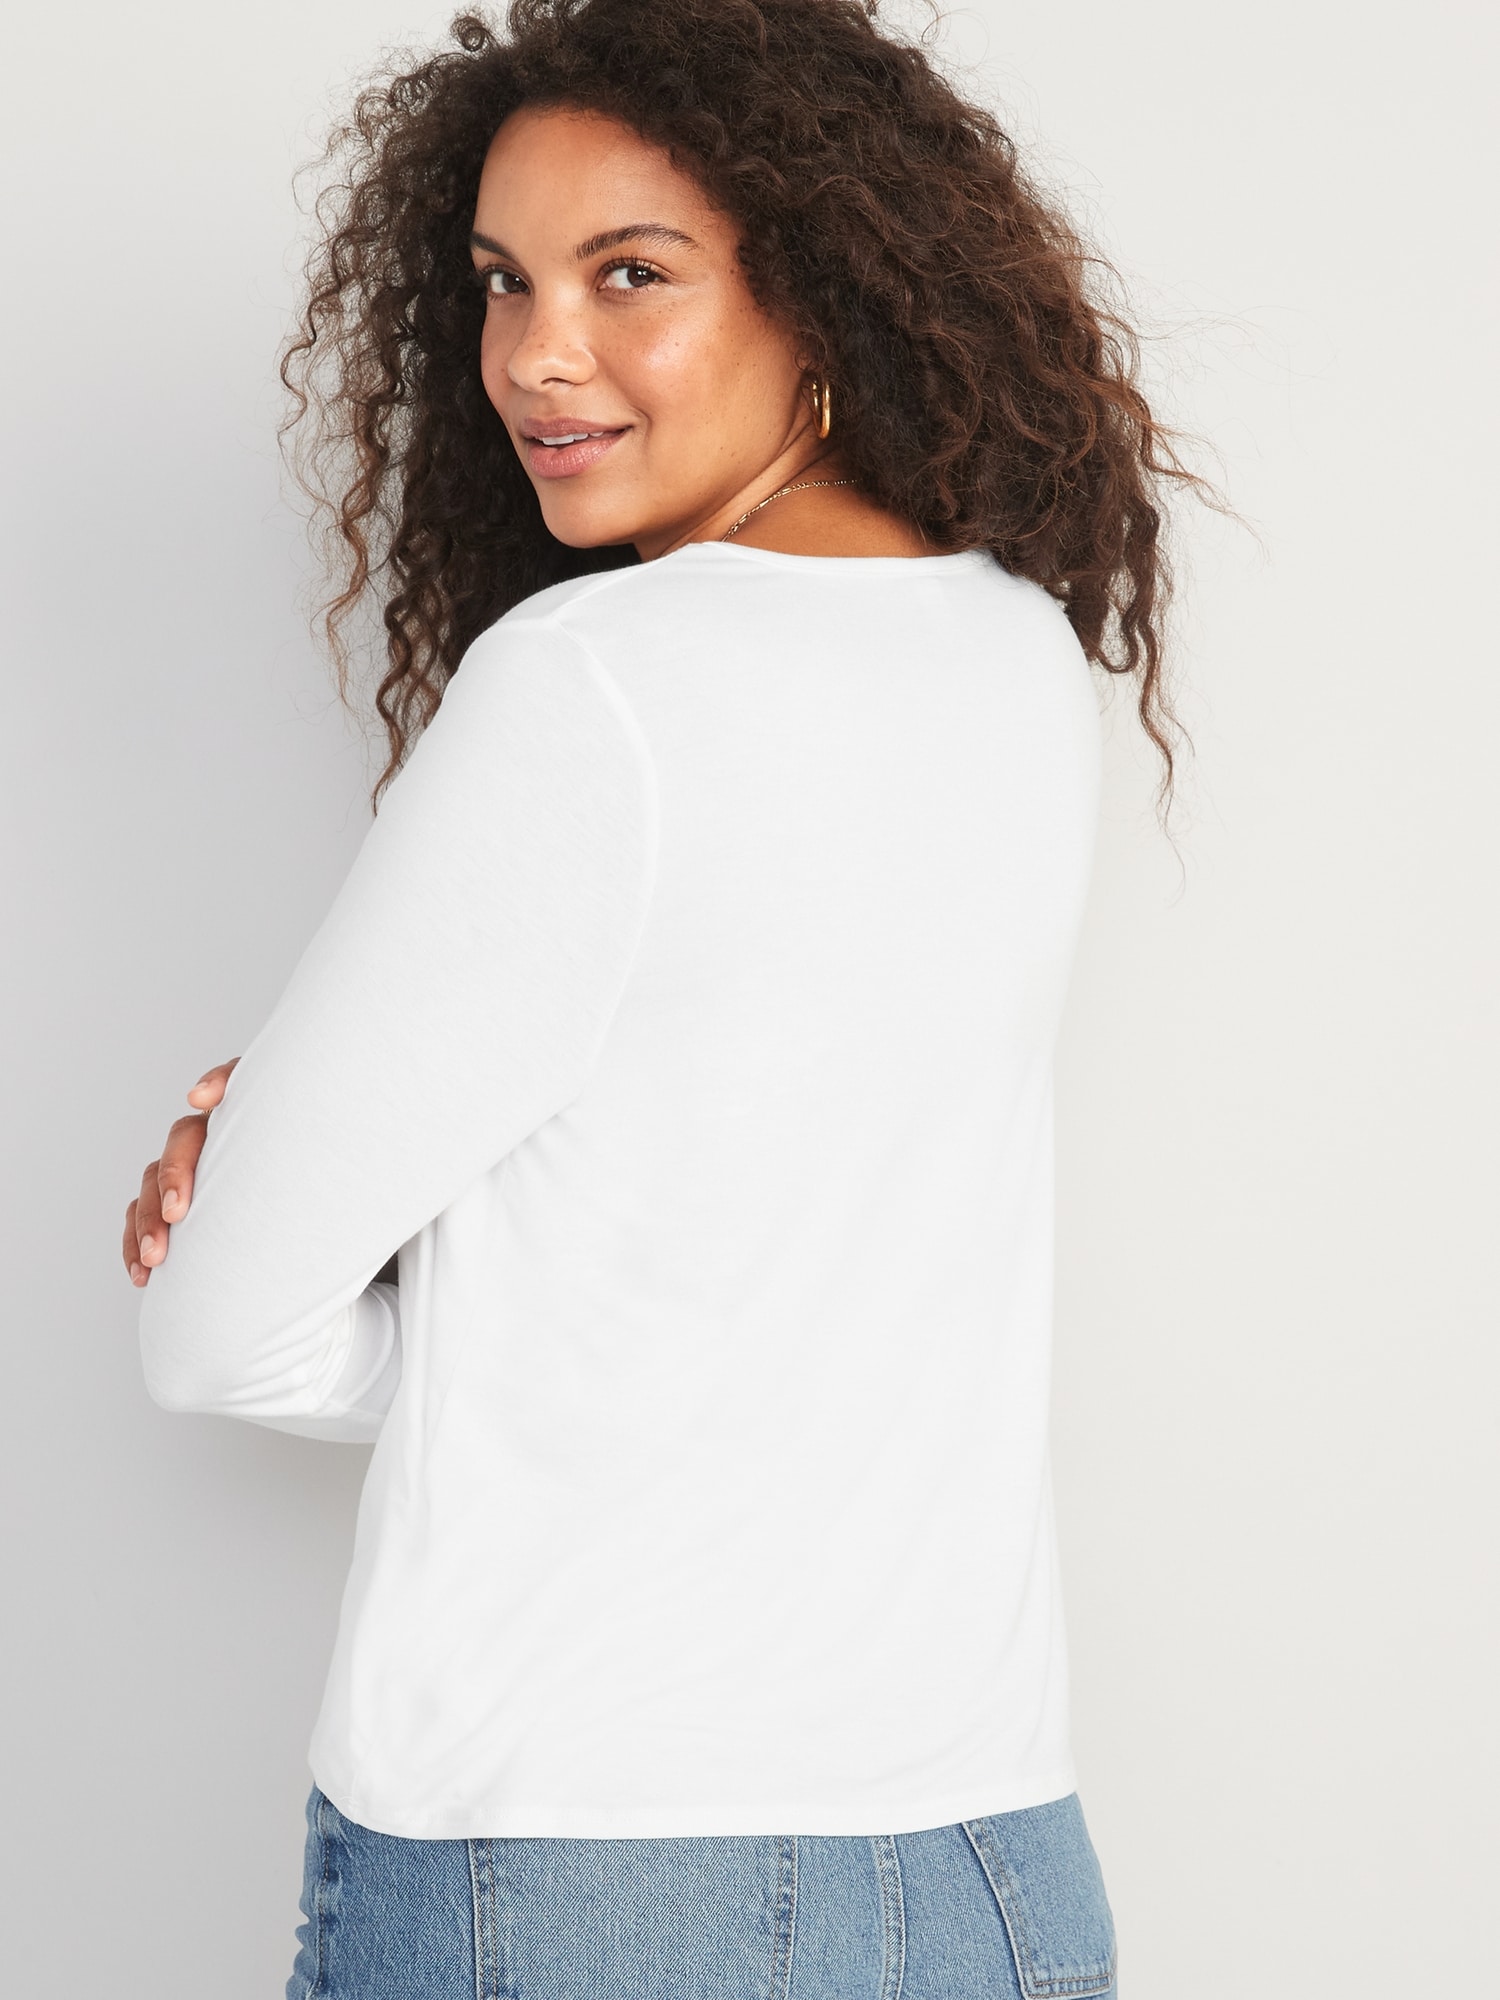 Luxe Crew-Neck Long-Sleeve T-Shirt for Women